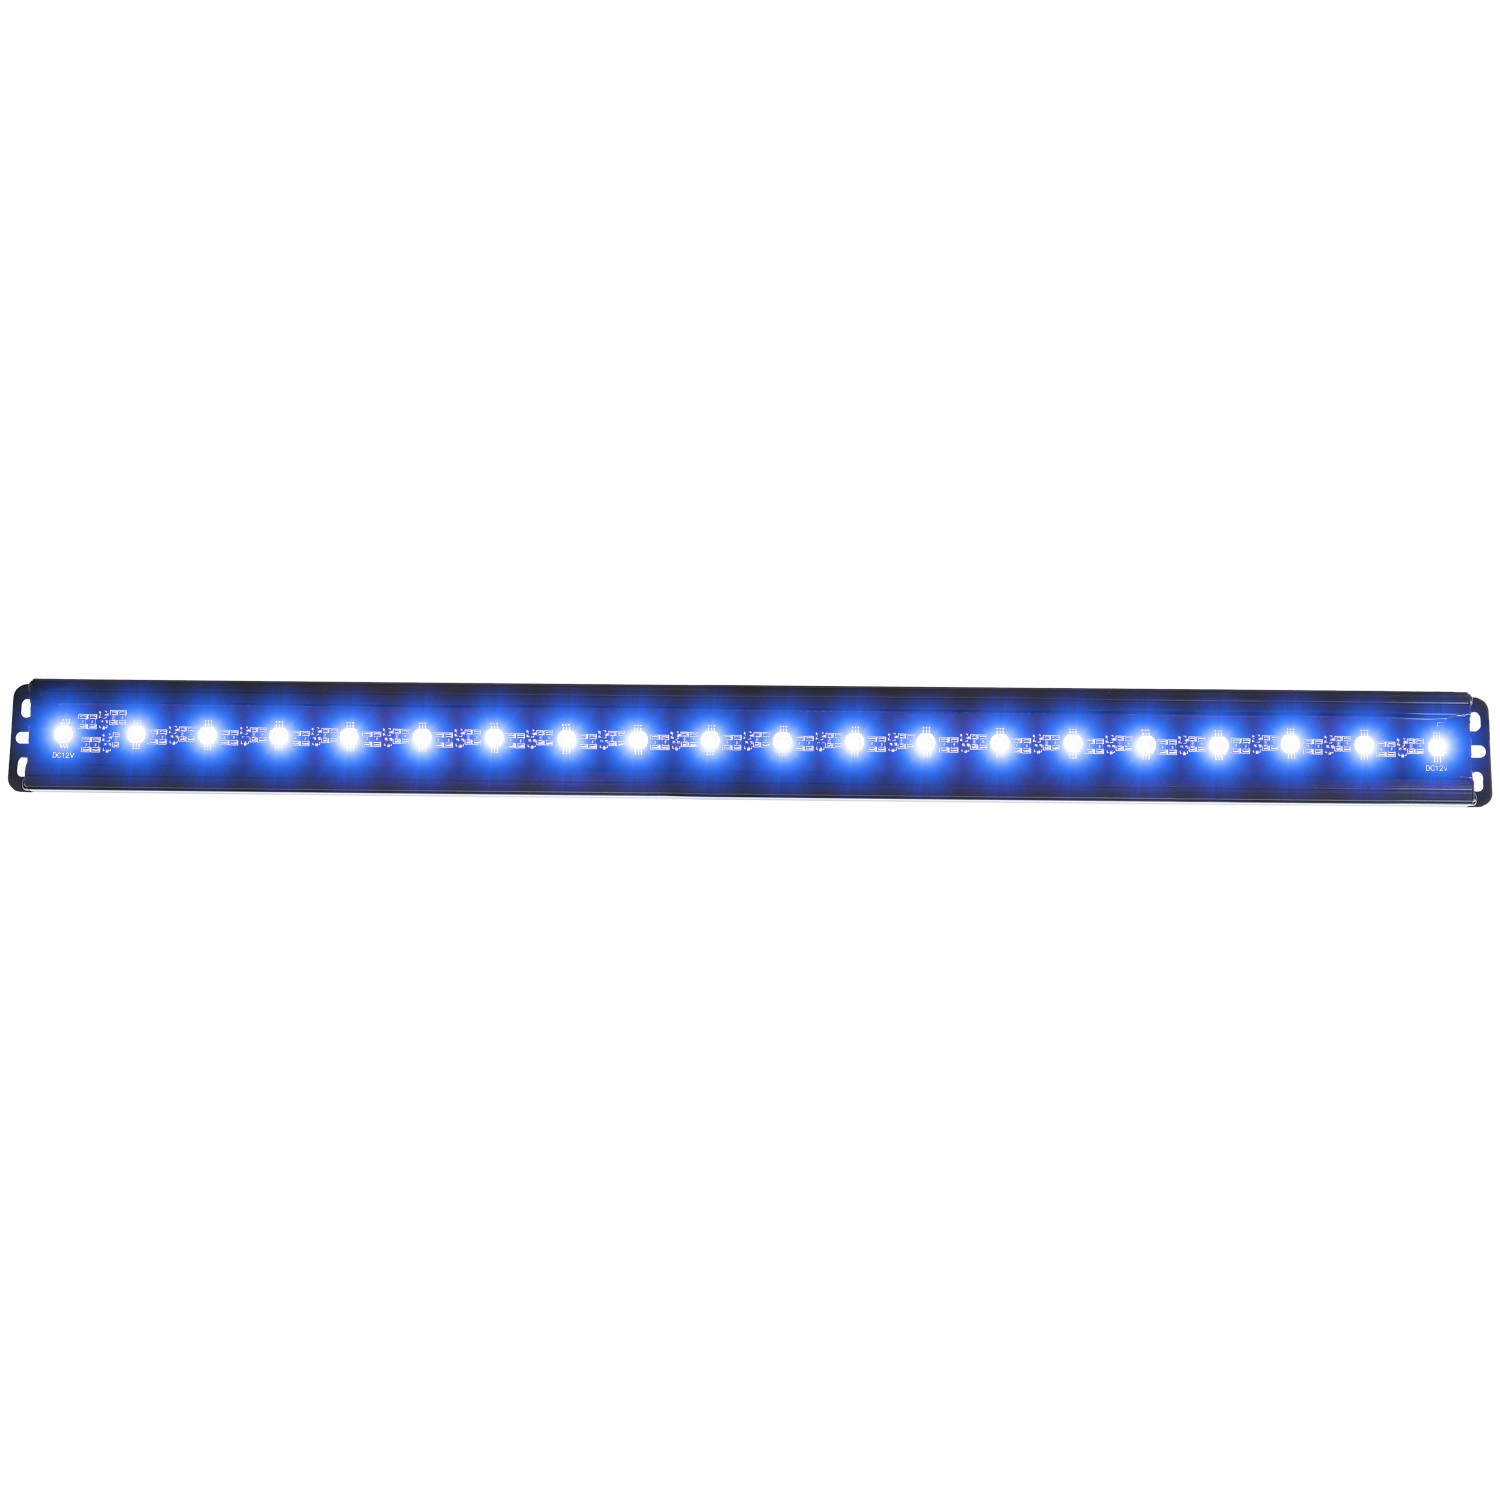 Anzo USA Anzo USA 861154 LED Universal Light Bar